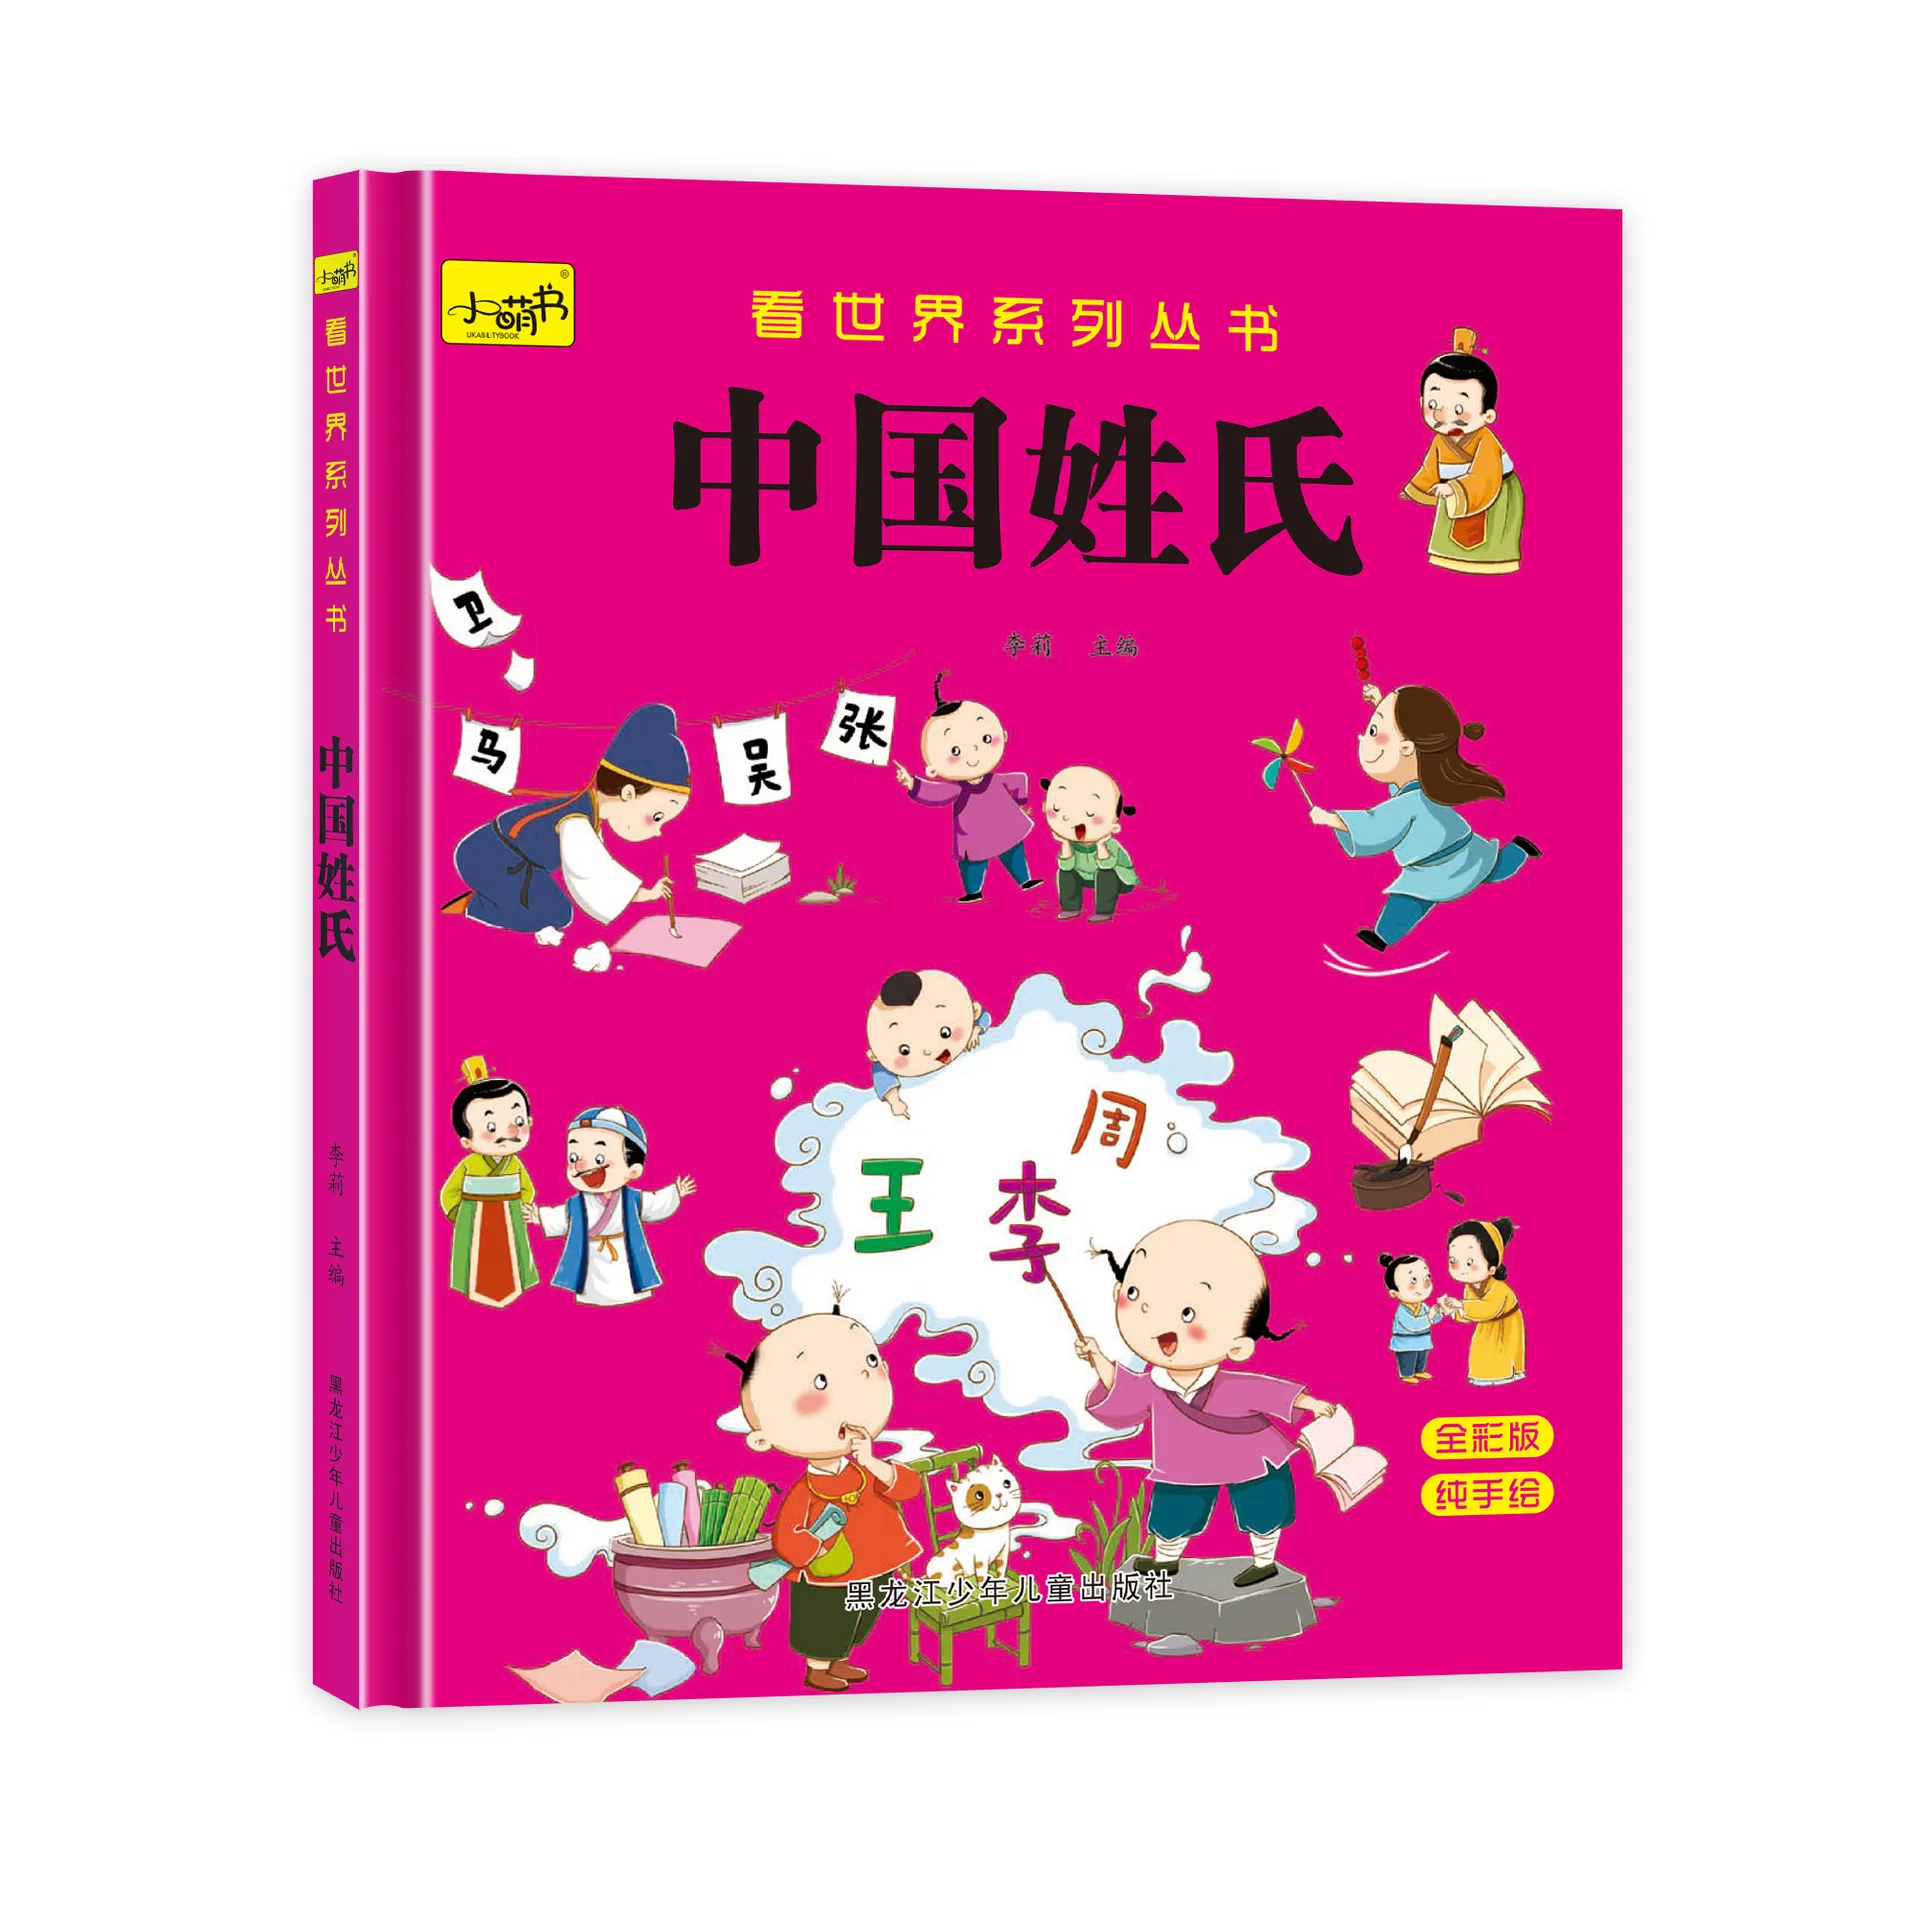 

Reading The World Series of Chinese Mythology, Chinese History, Hardshell Picture Books, Popular Science Encyclopedia Books